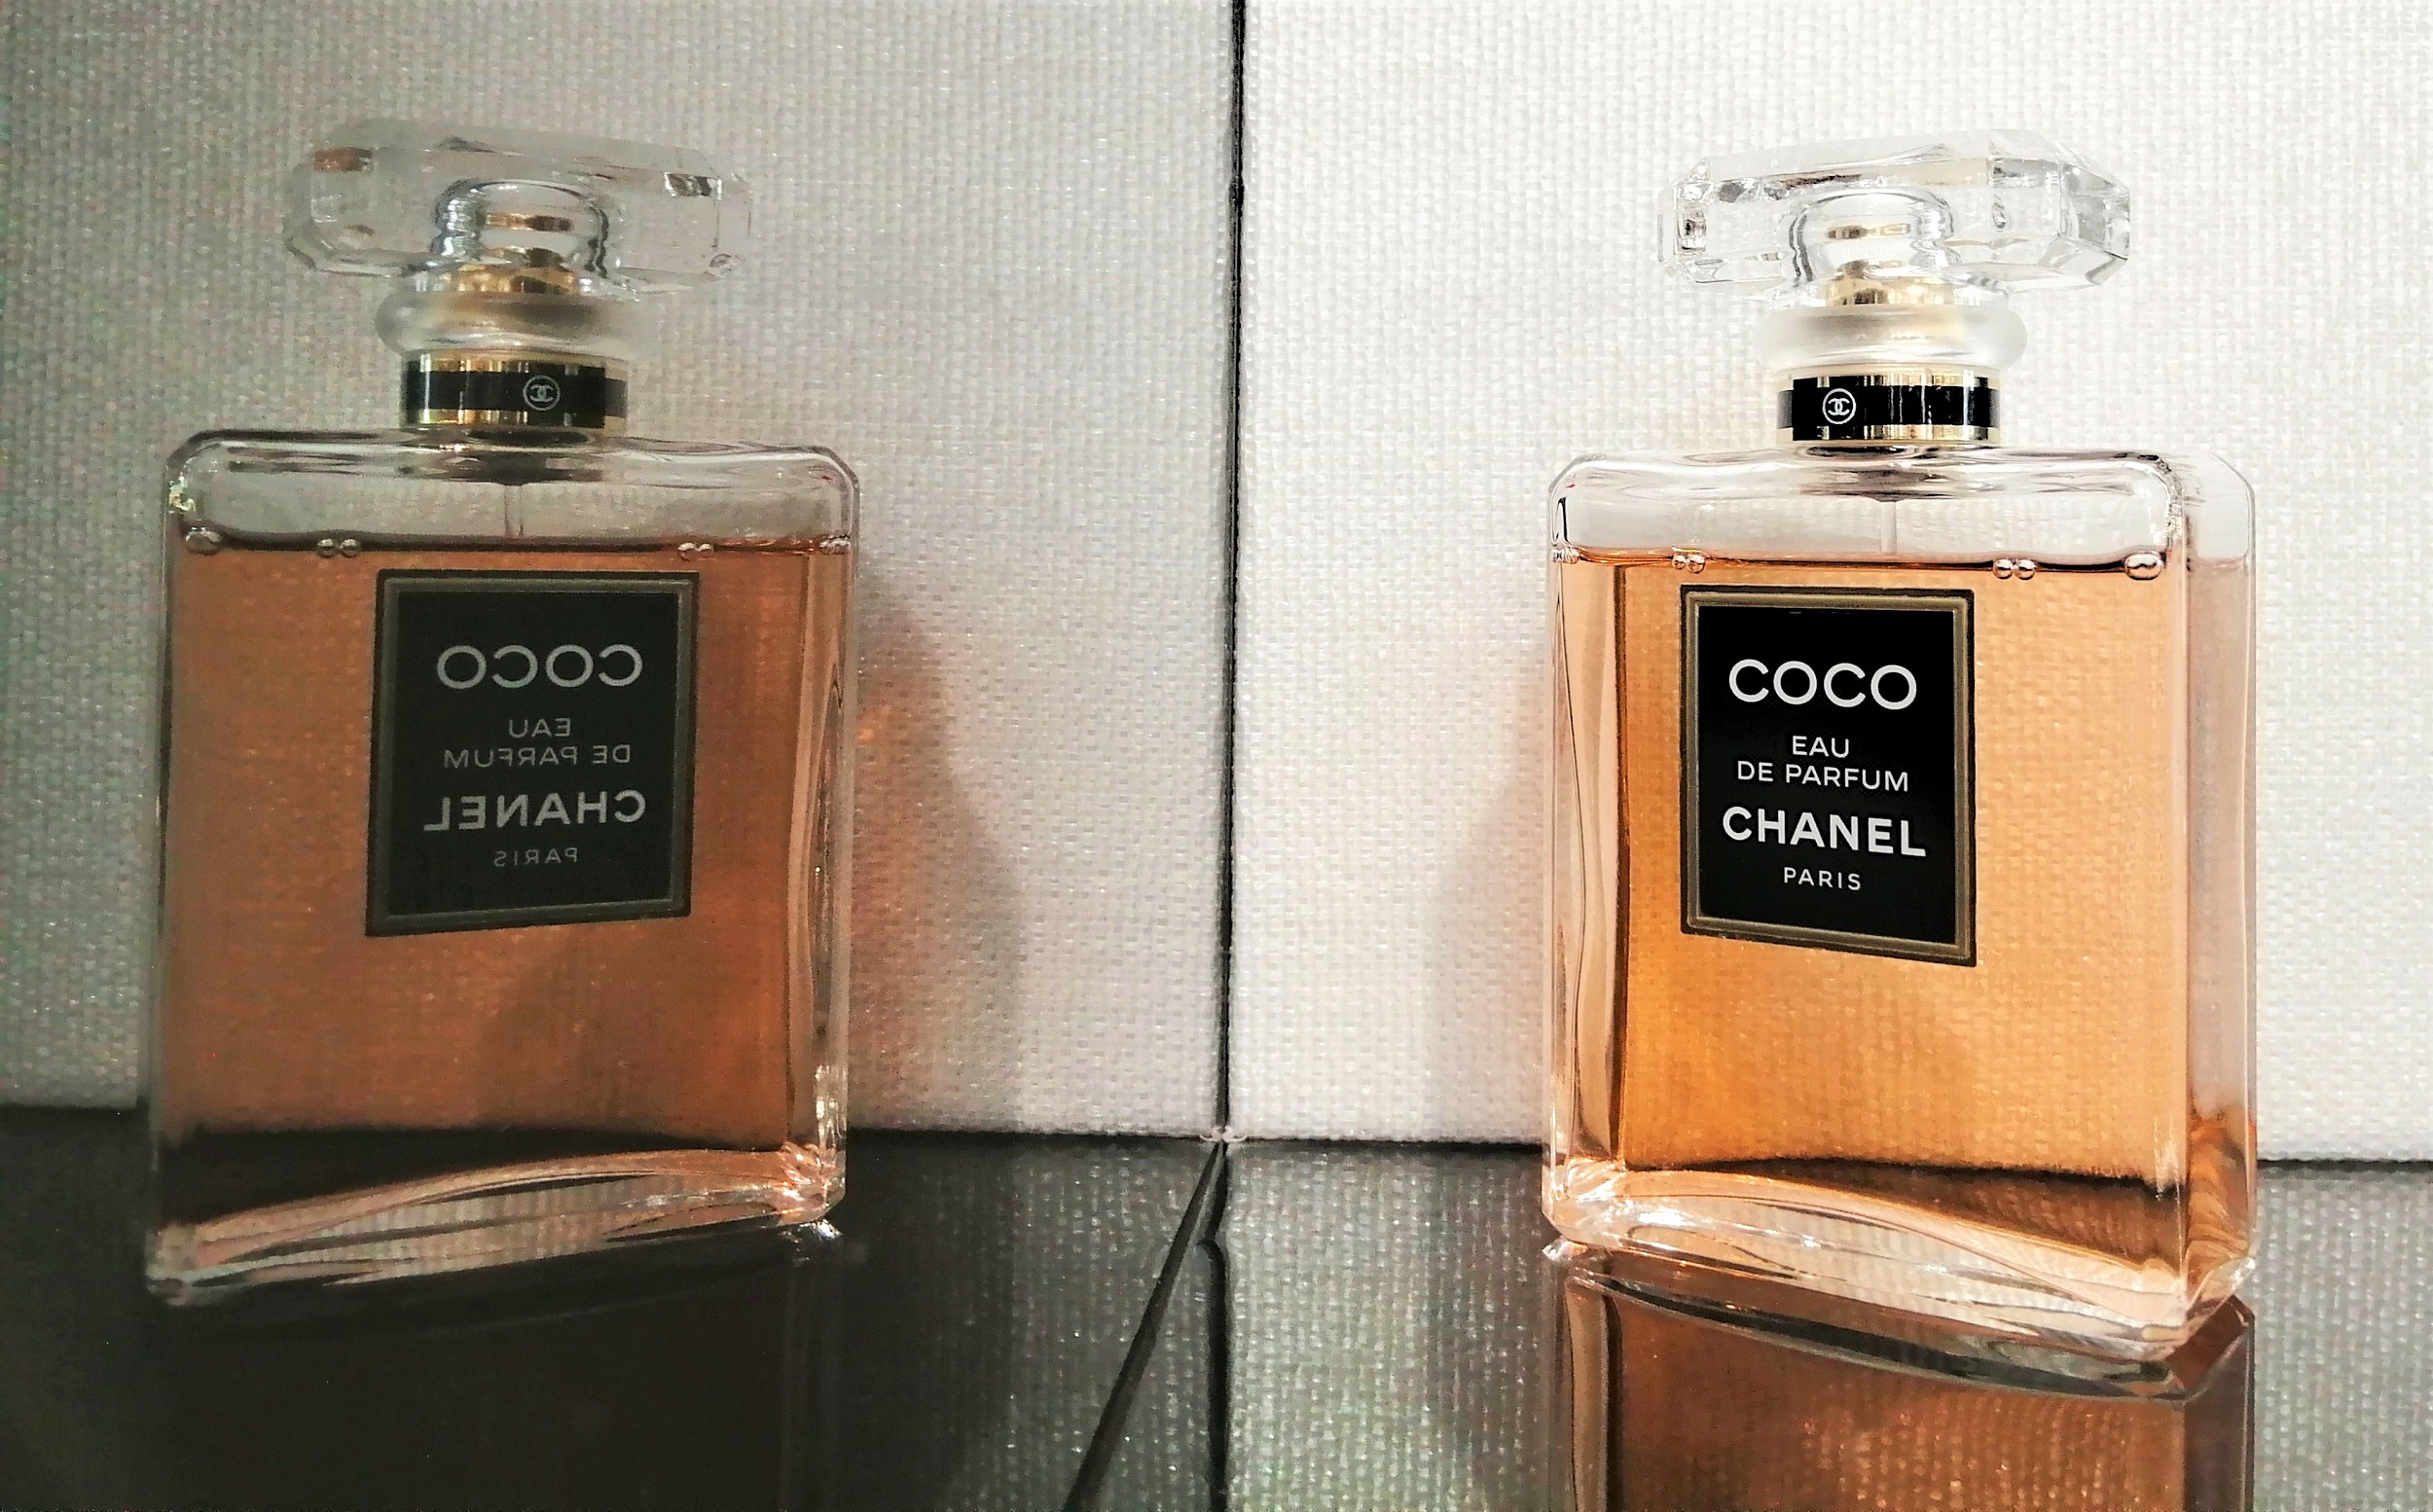 Chanel: perfume and cosmetics at MAKEUP